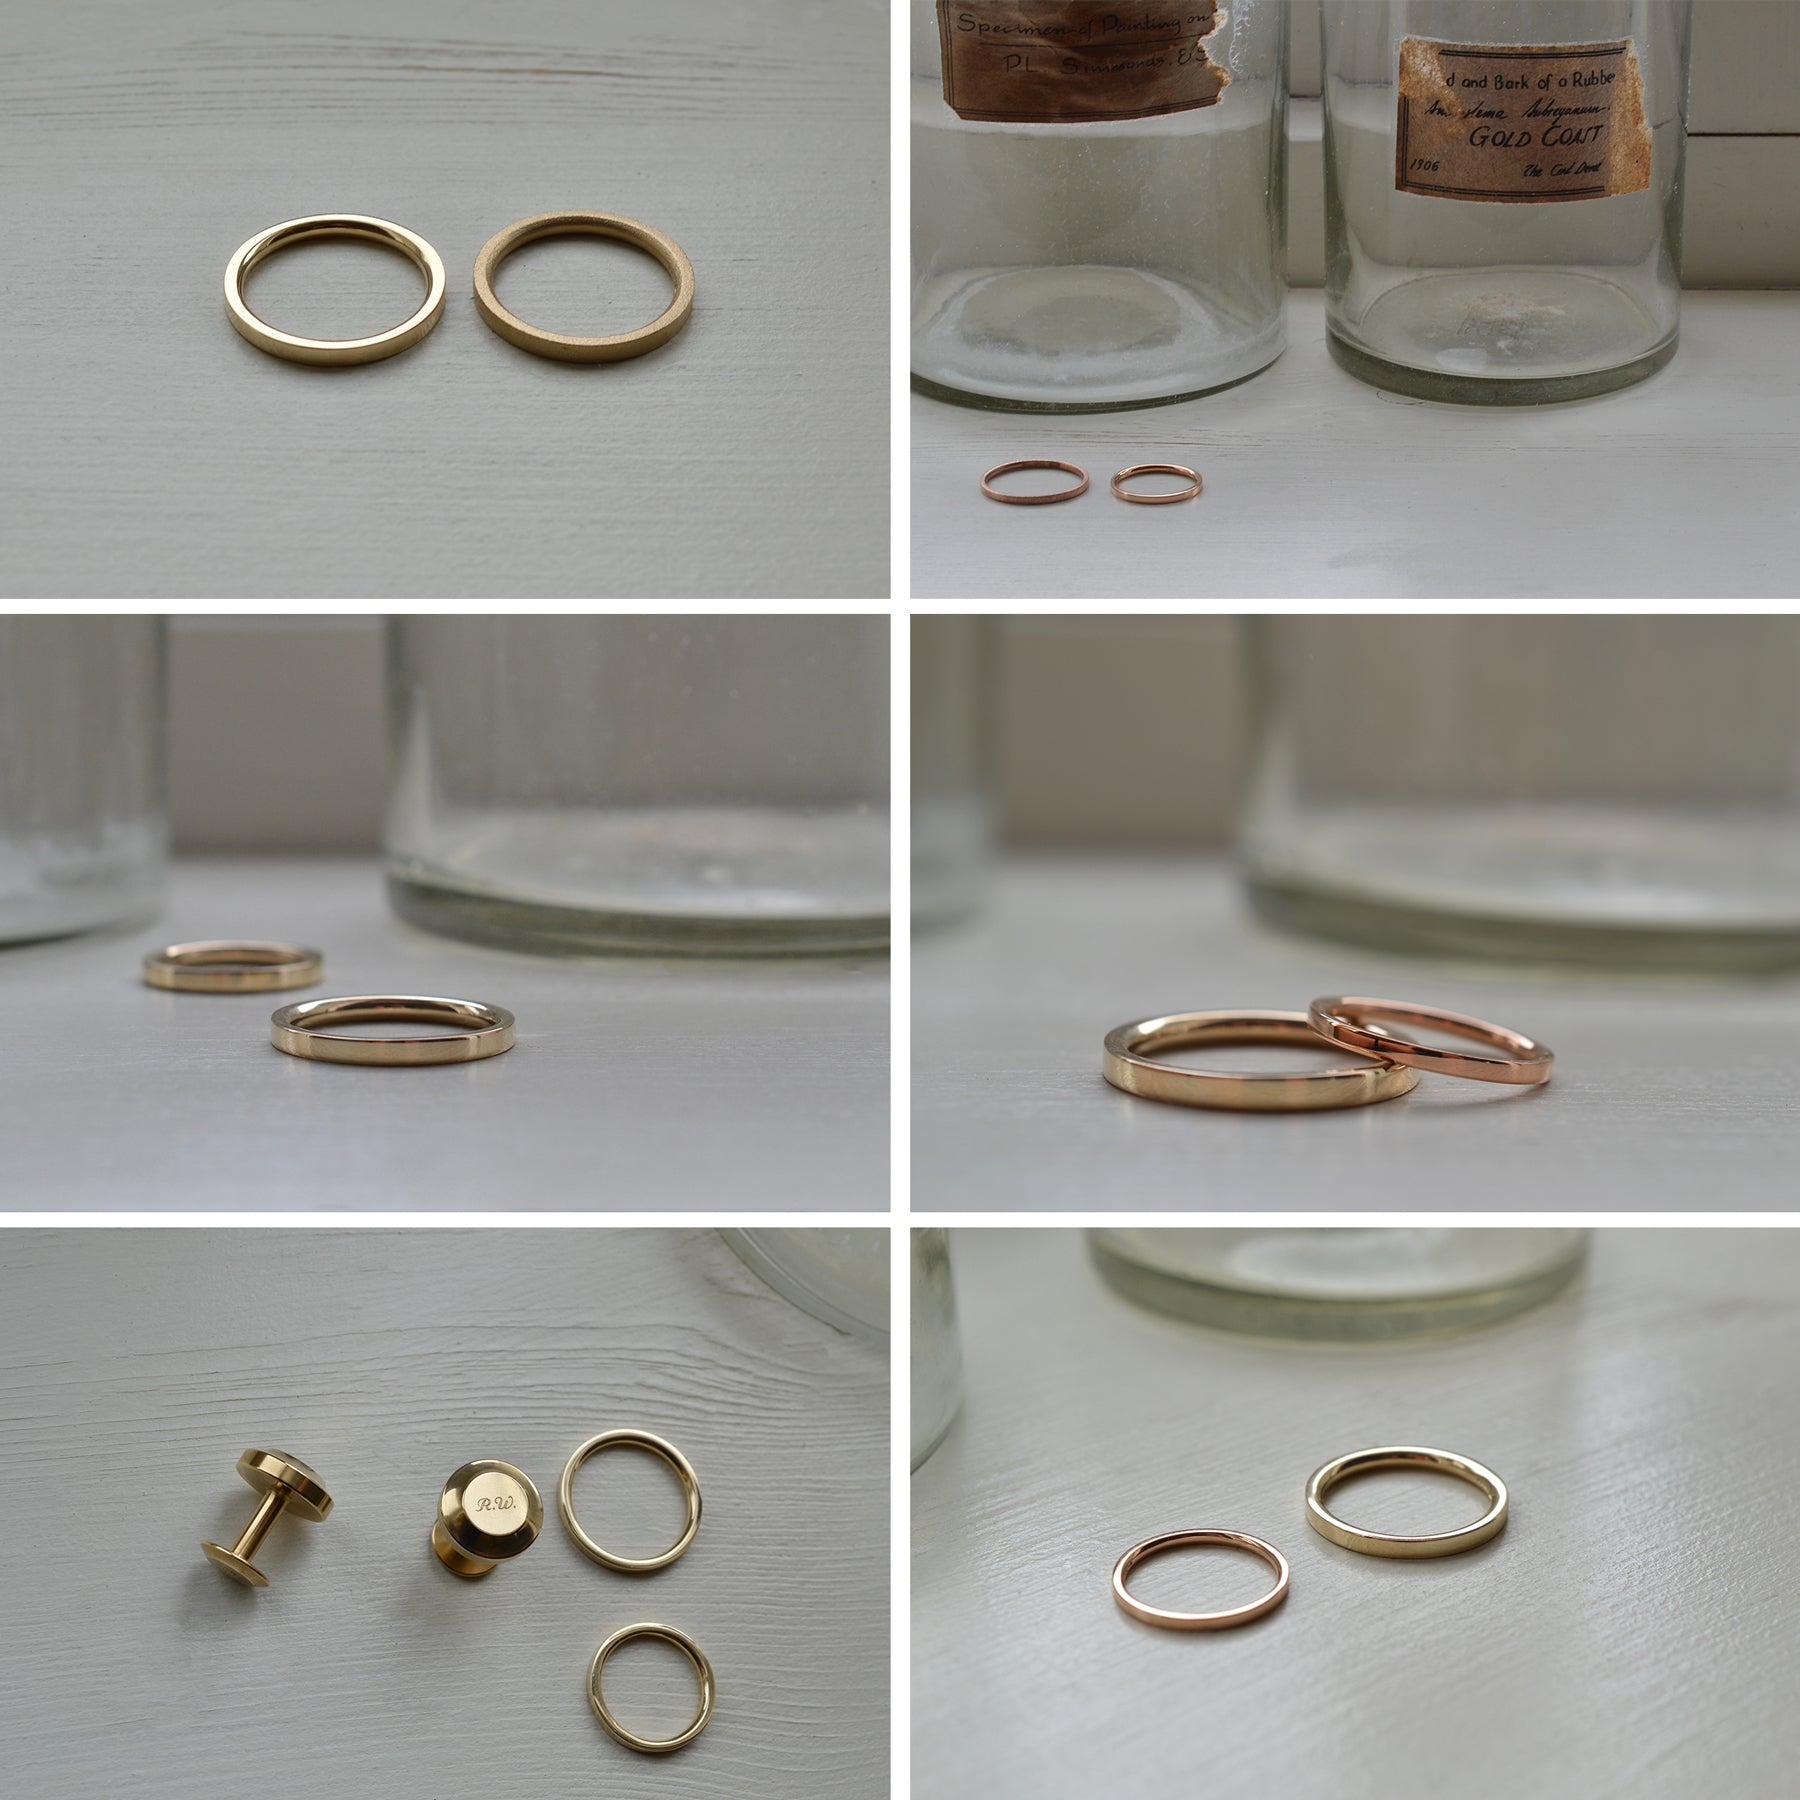 bespoke wedding rings | Alice Made This